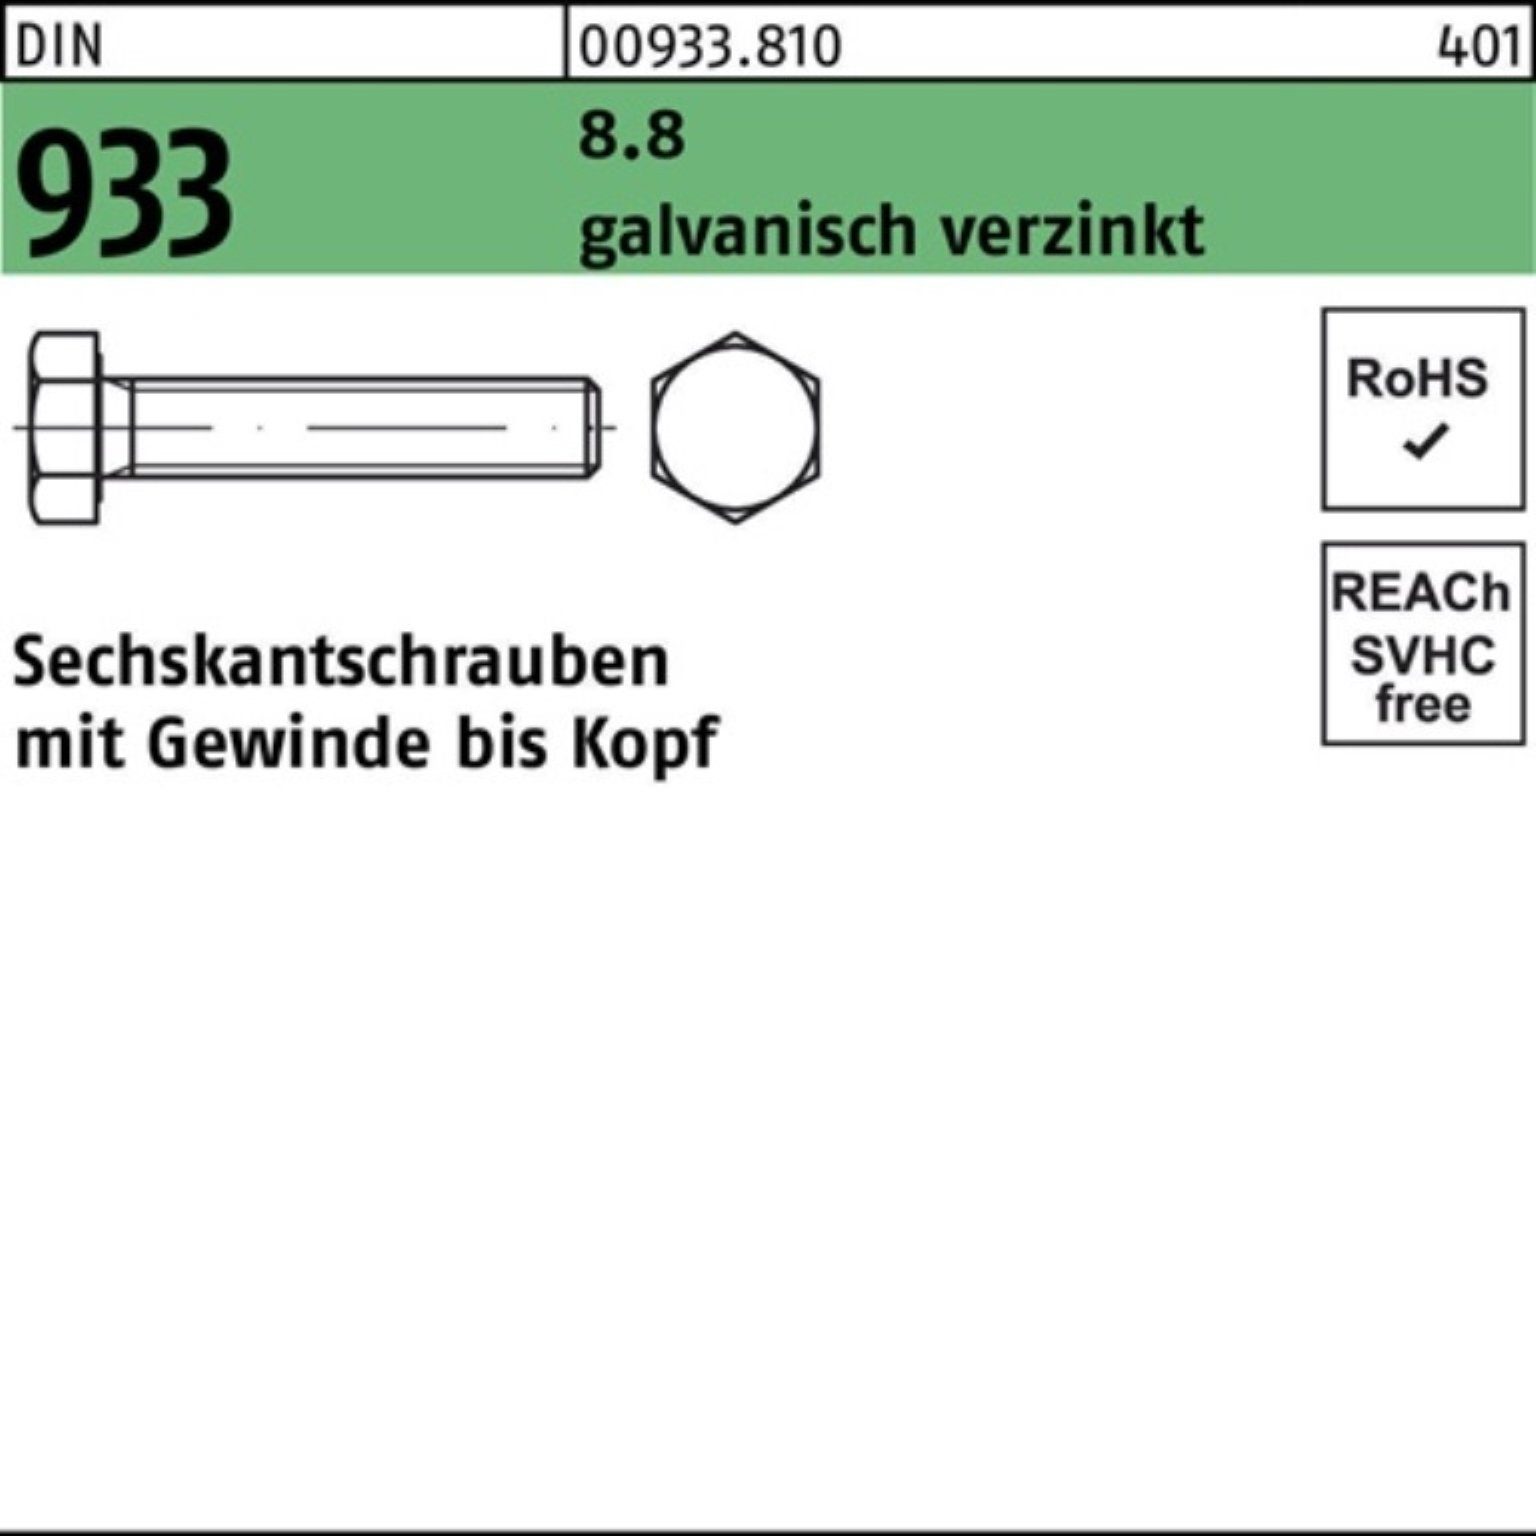 DIN Reyher Sechskantschraube M24x 180 VG Pack 8.8 Stü Sechskantschraube galv.verz. 100er 933 1